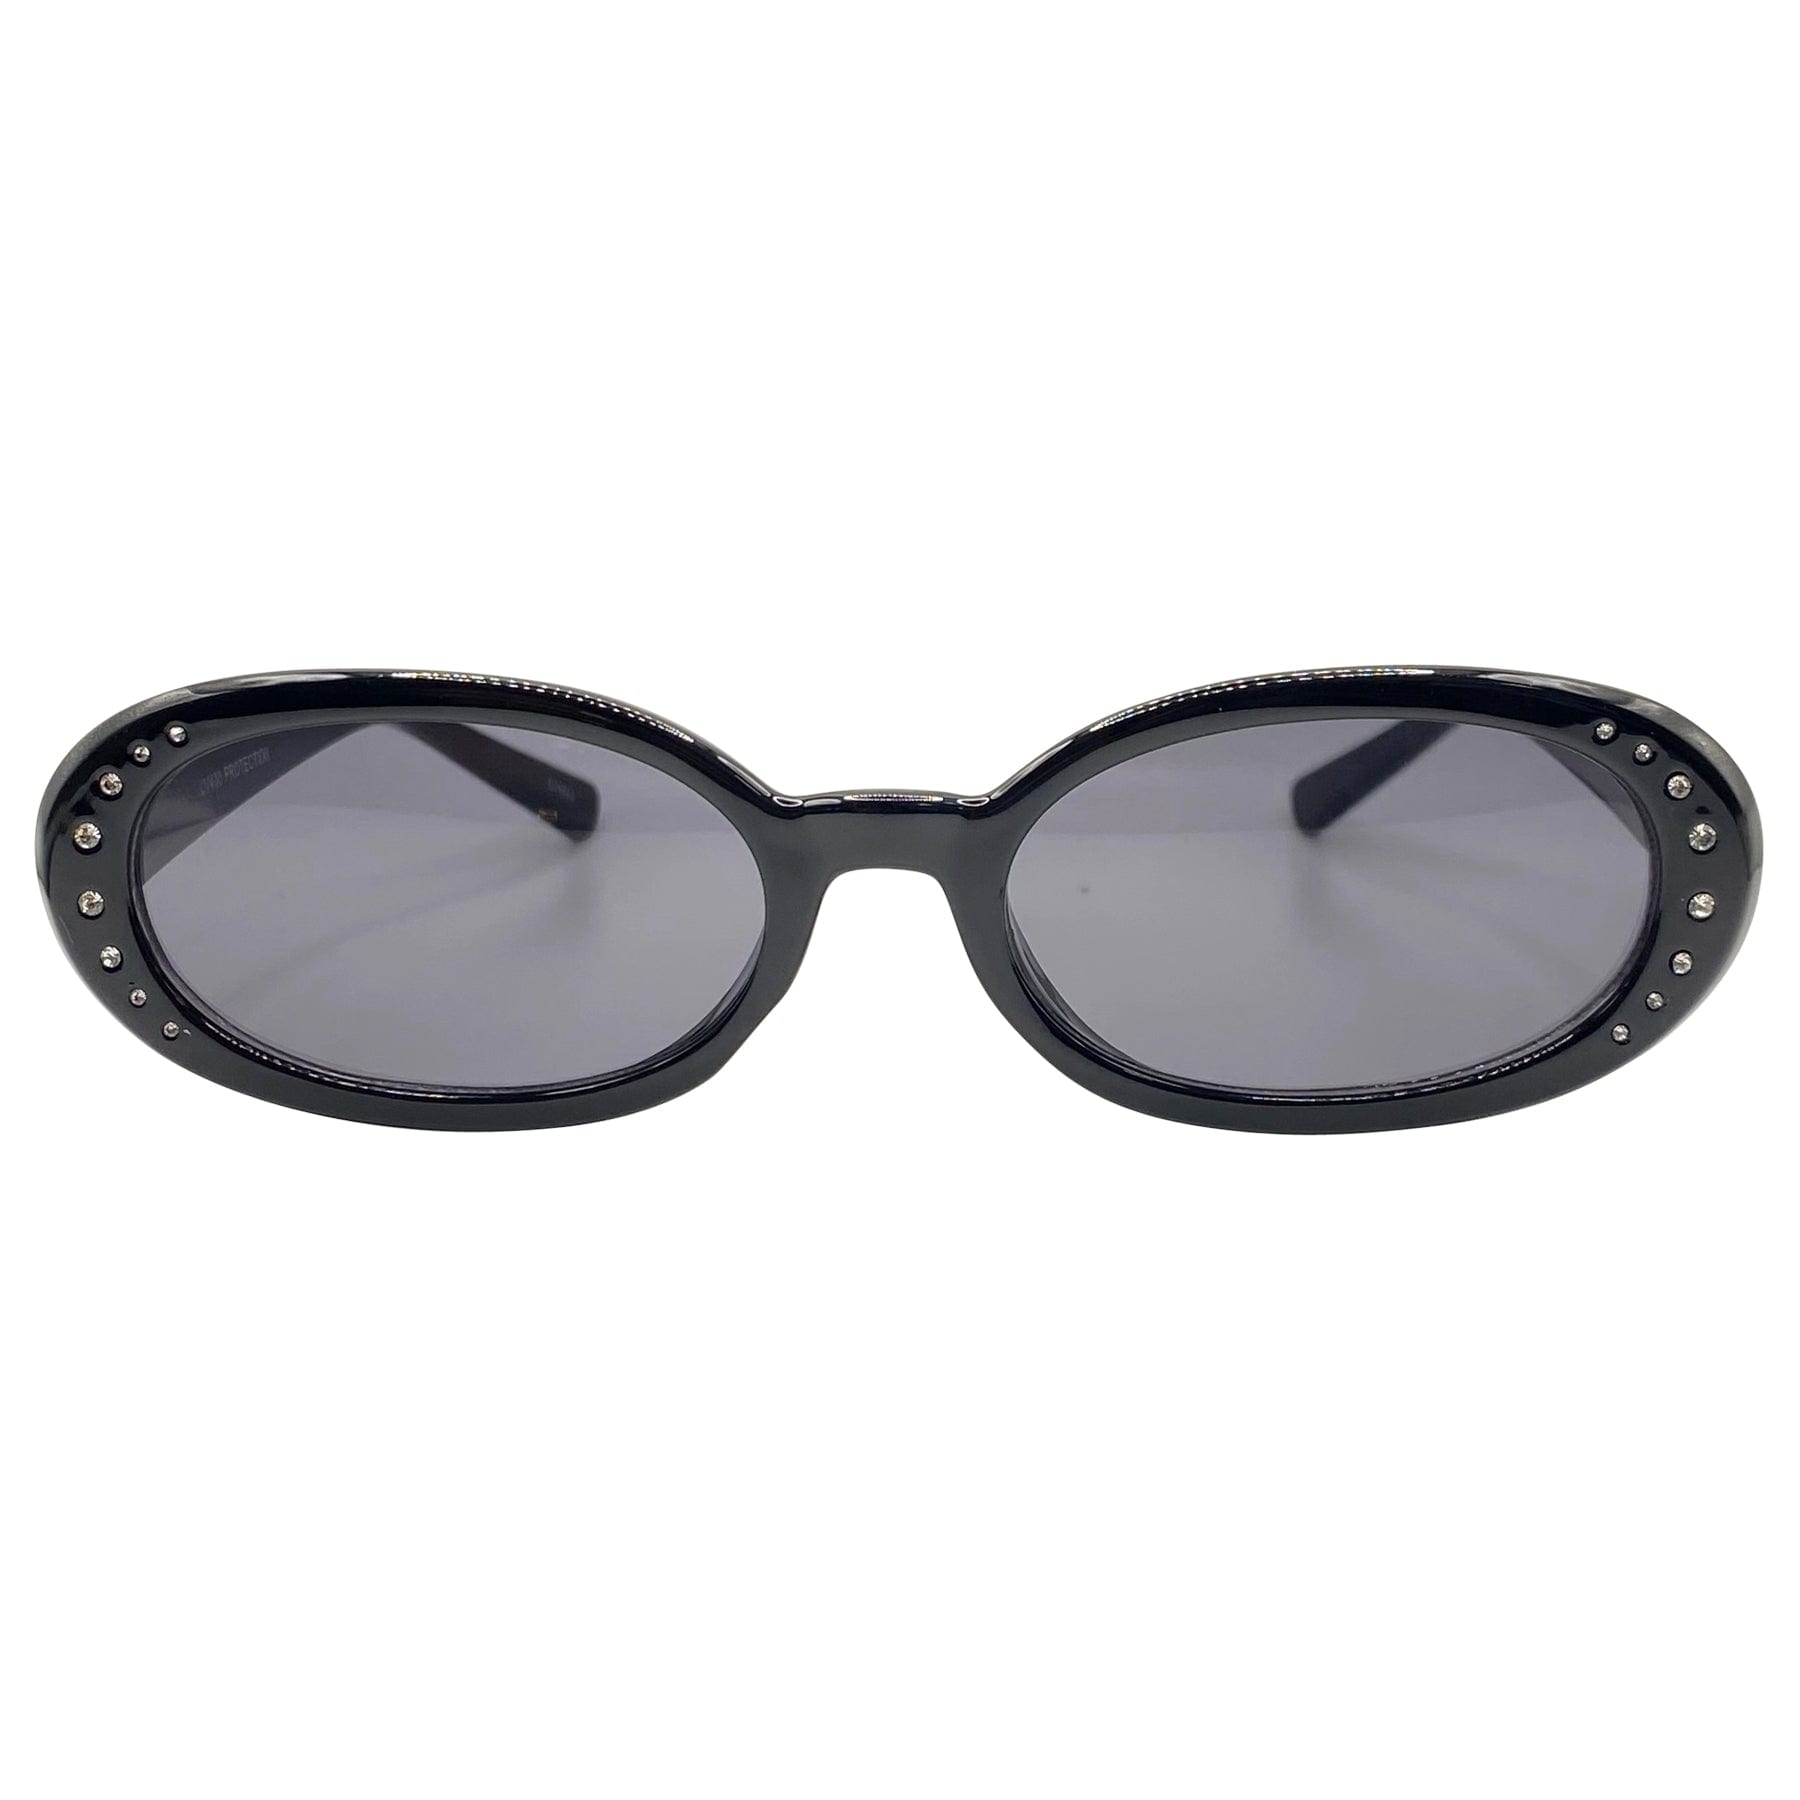 black round sunglasses with rhinestones and super dark tinted lens